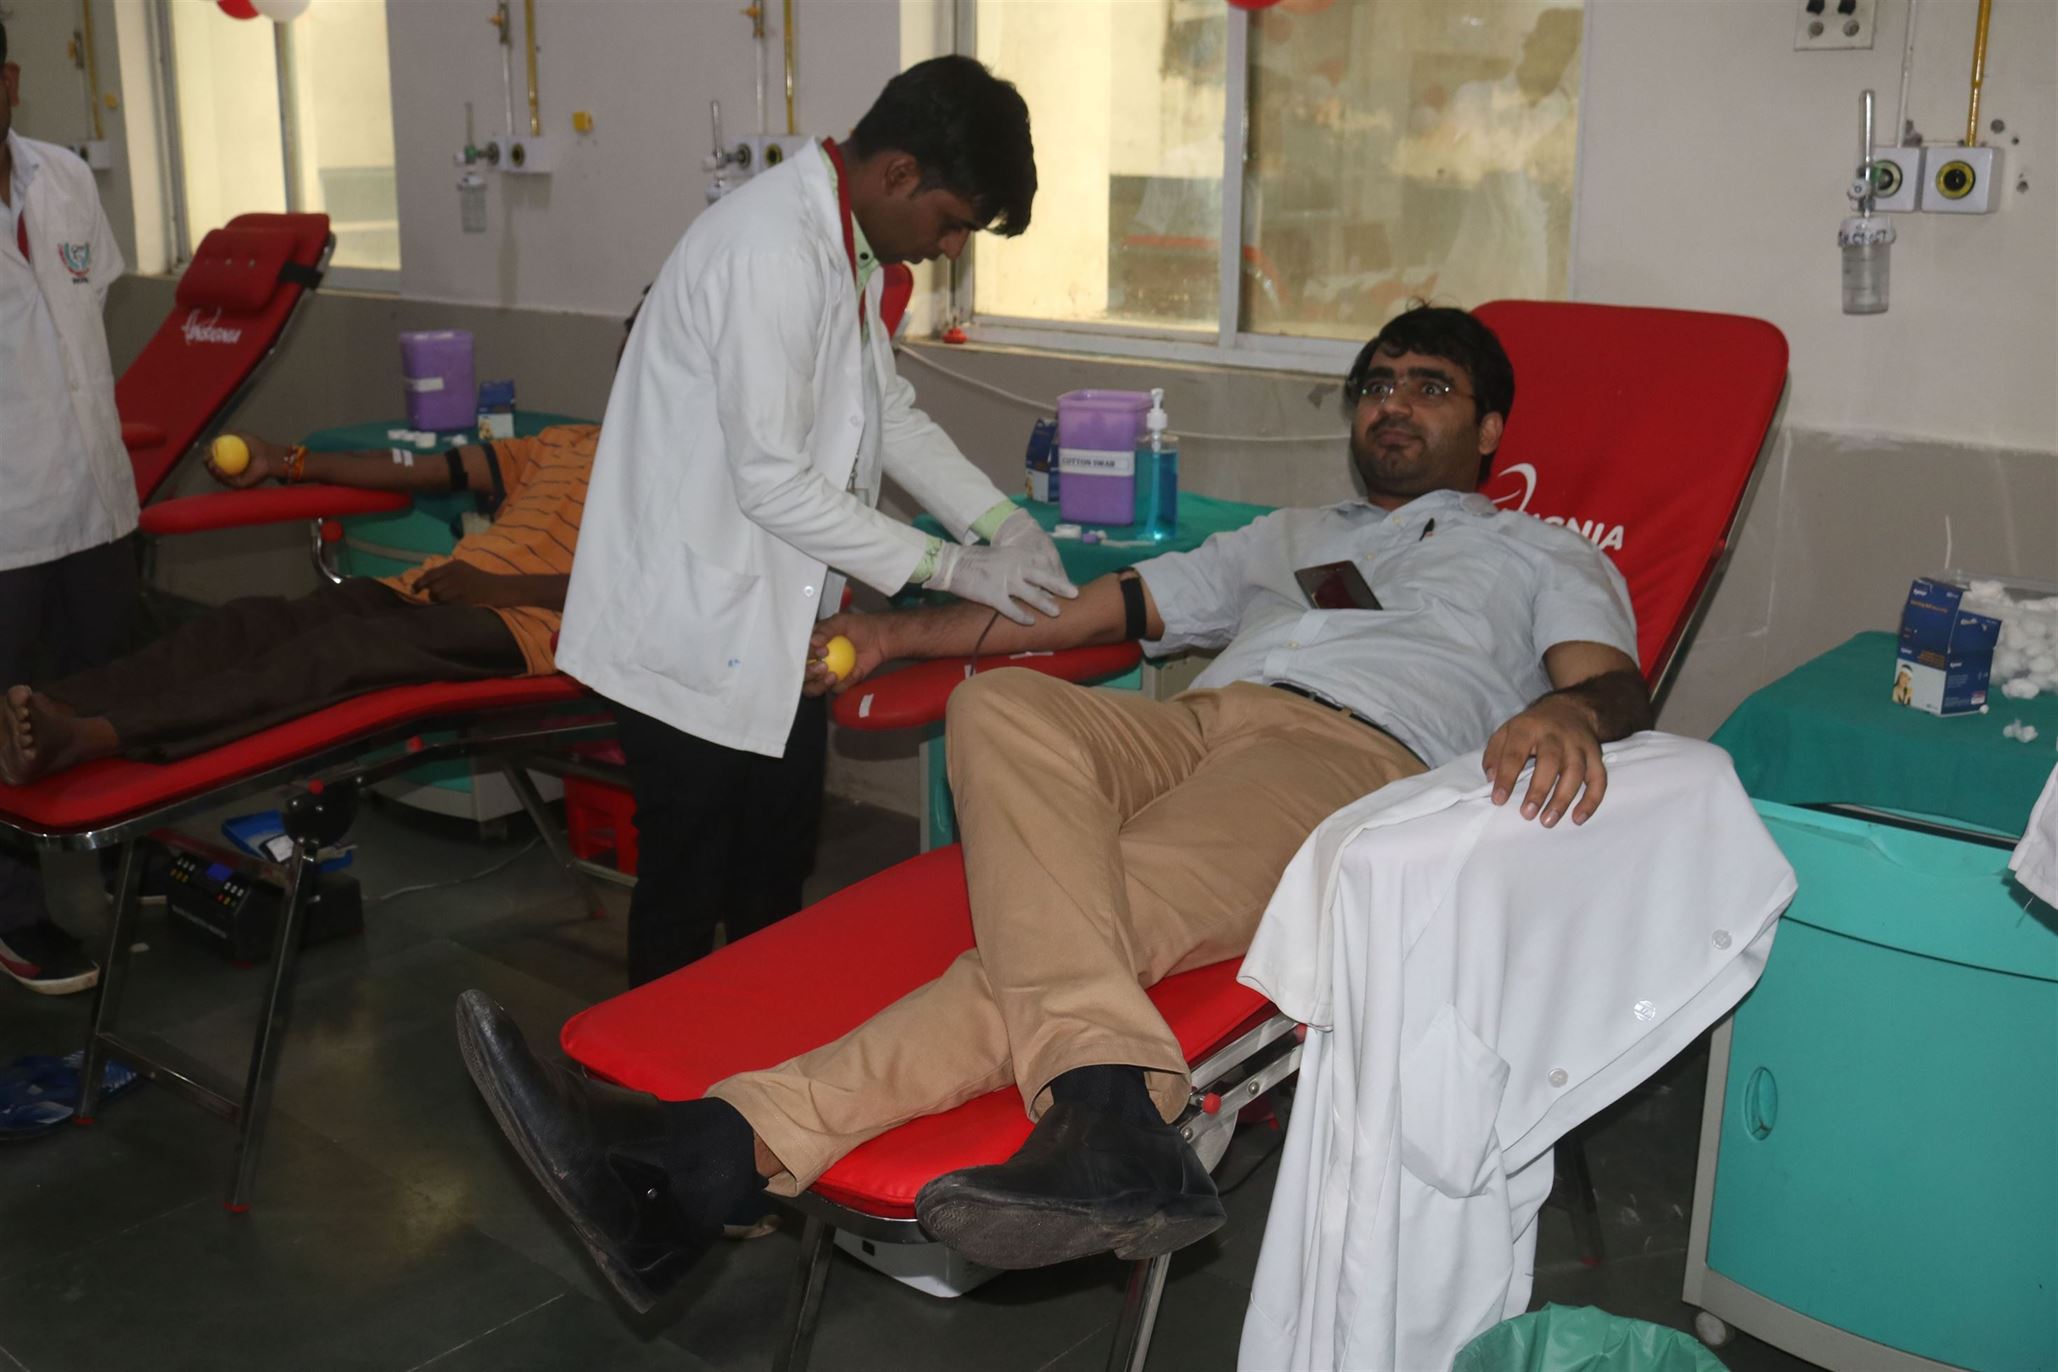 Raktdan Amrit Mahotsav - Blood Donation Camp